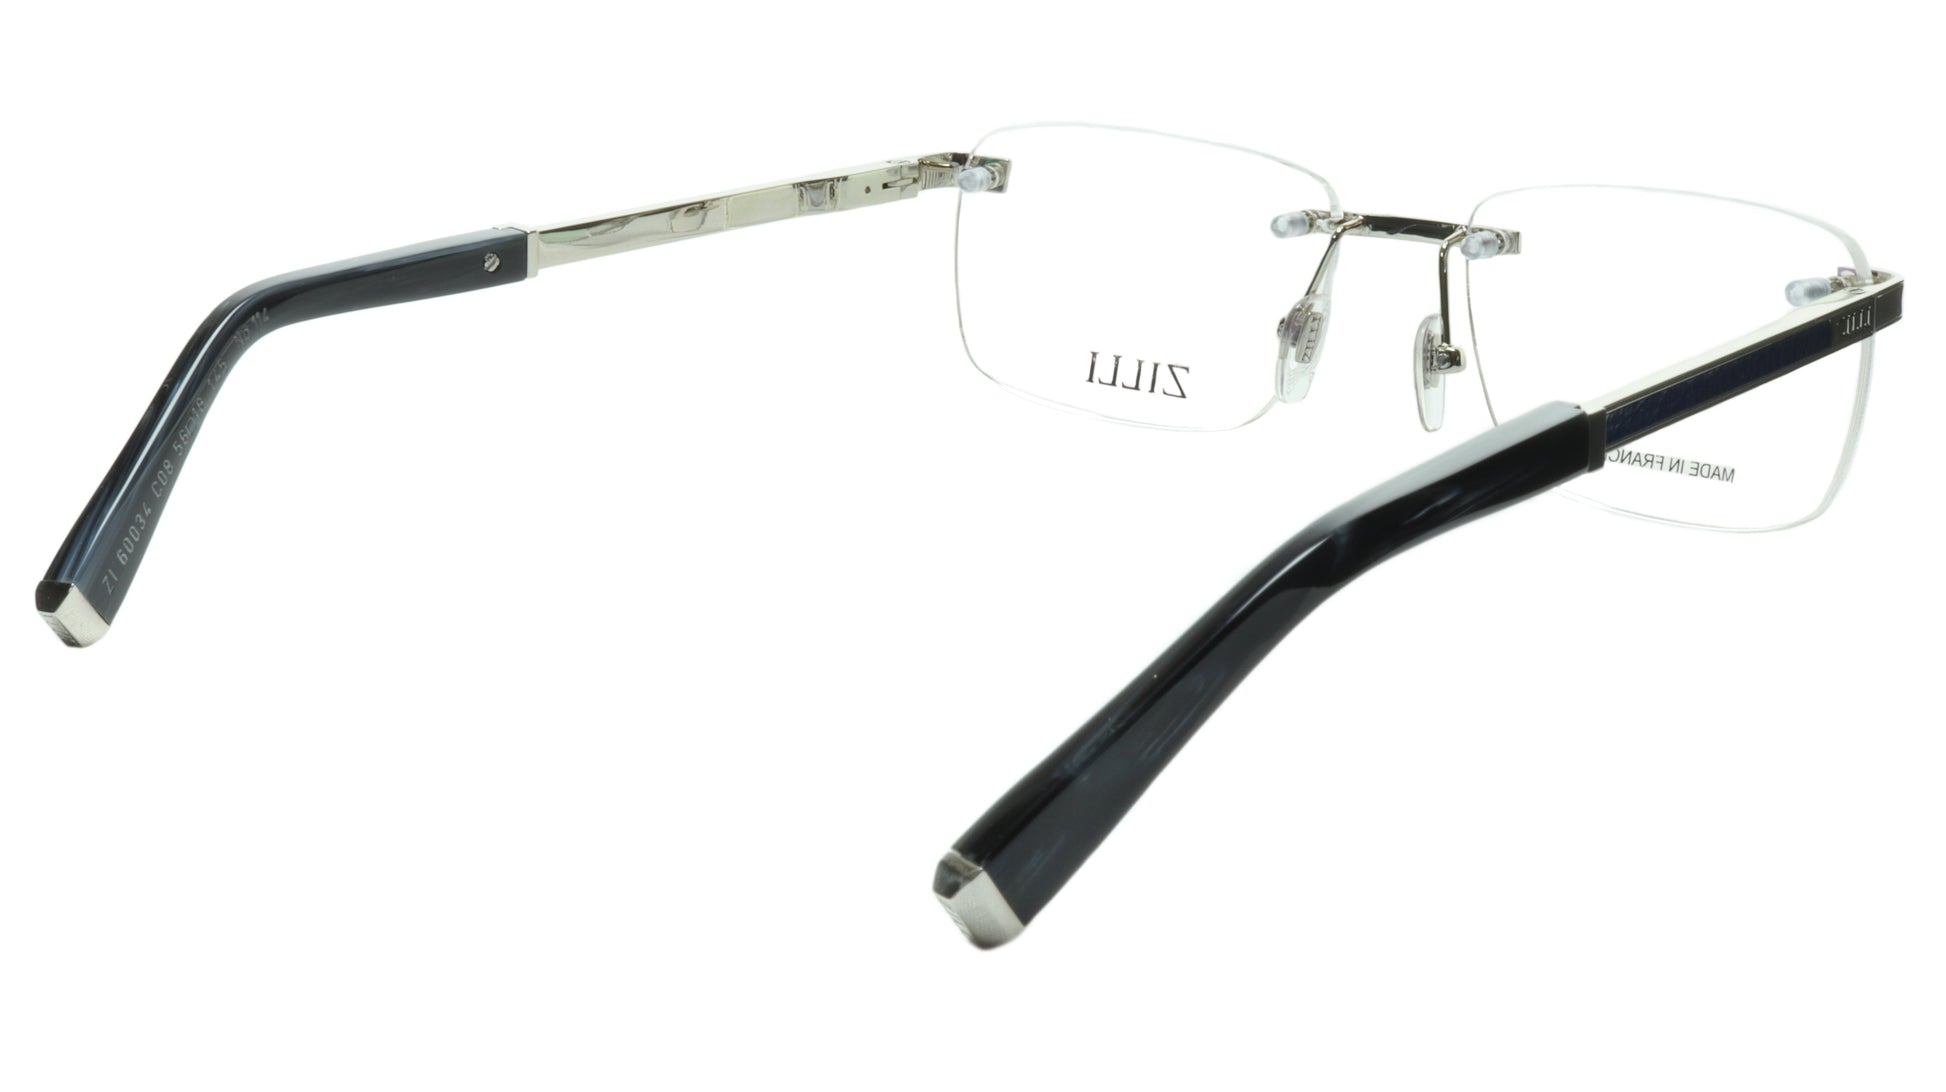 ZILLI Eyeglasses Frame Titanium Acetate Silver Blue France Made ZI 60034 C08 - Frame Bay